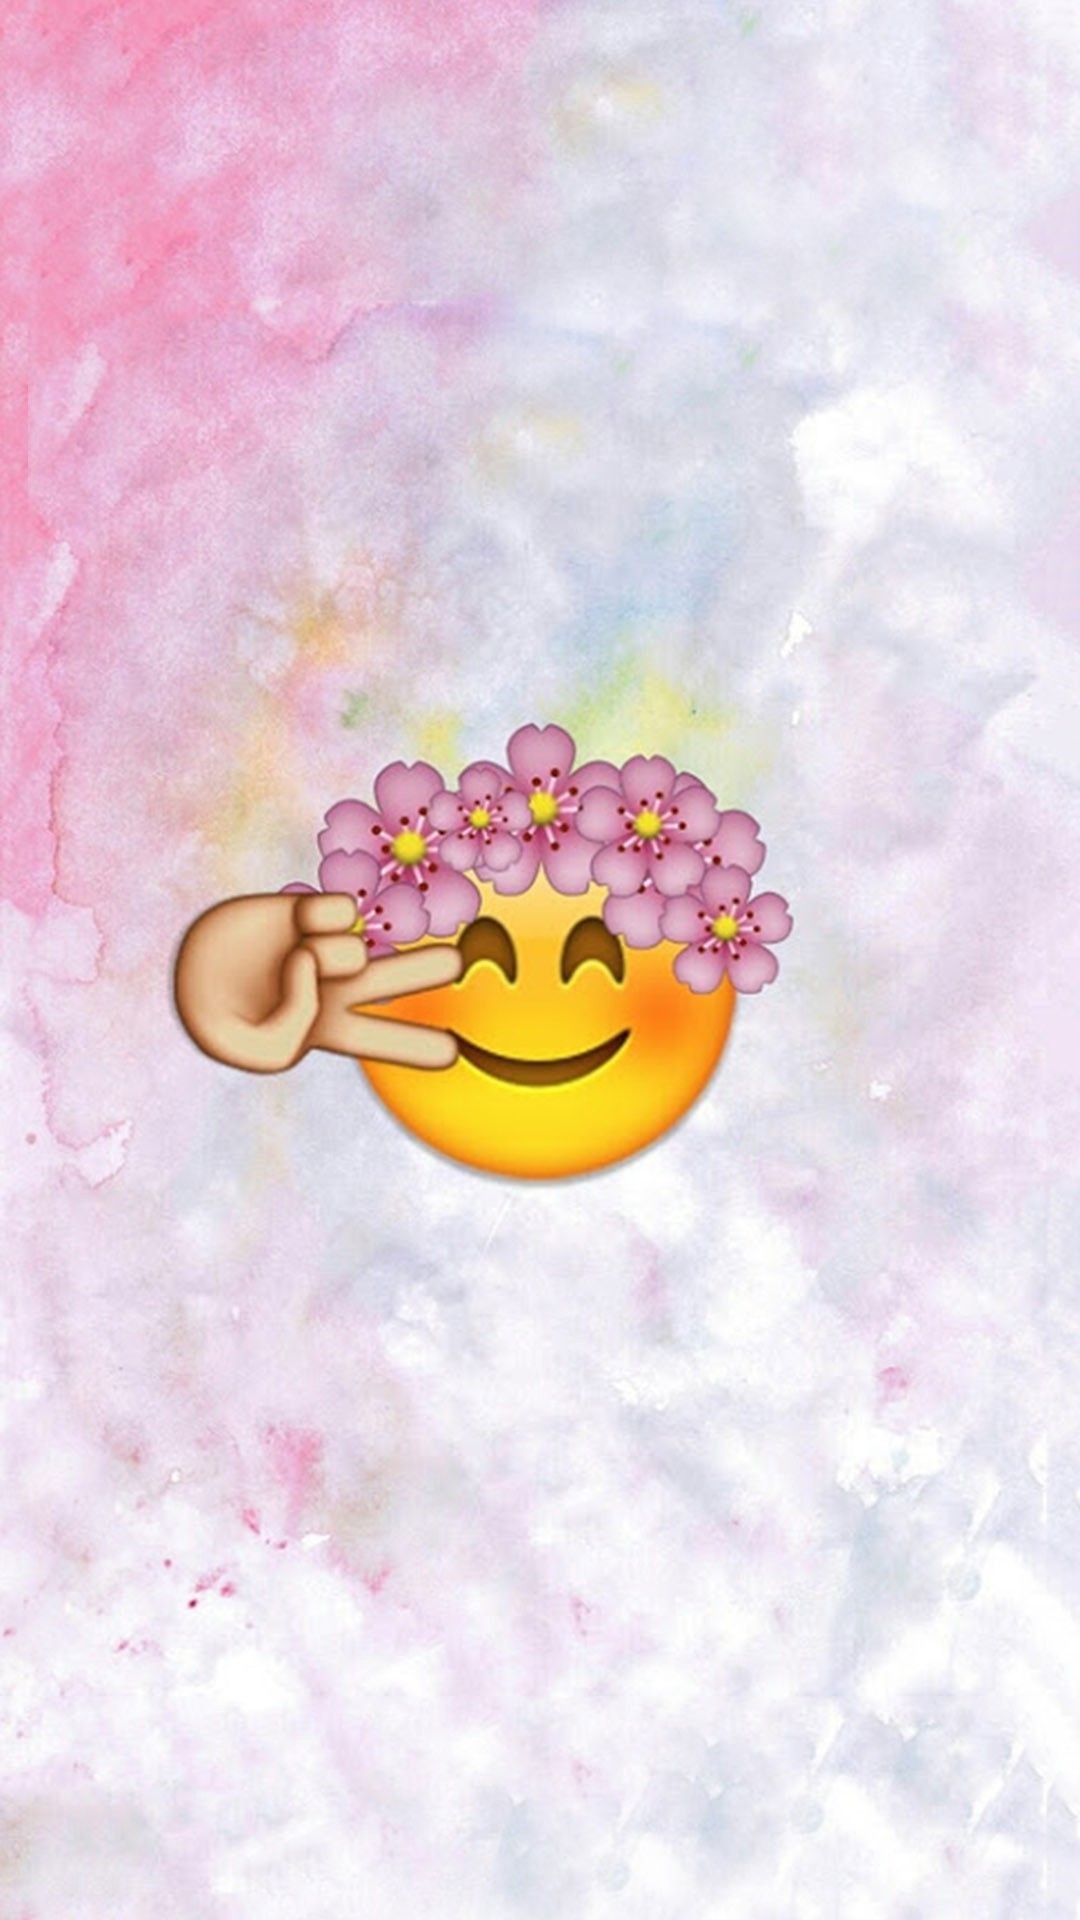 1080x Emoji Wallpaper, Wallpaper For iPhone, Cute Flower Crown Peace Sign